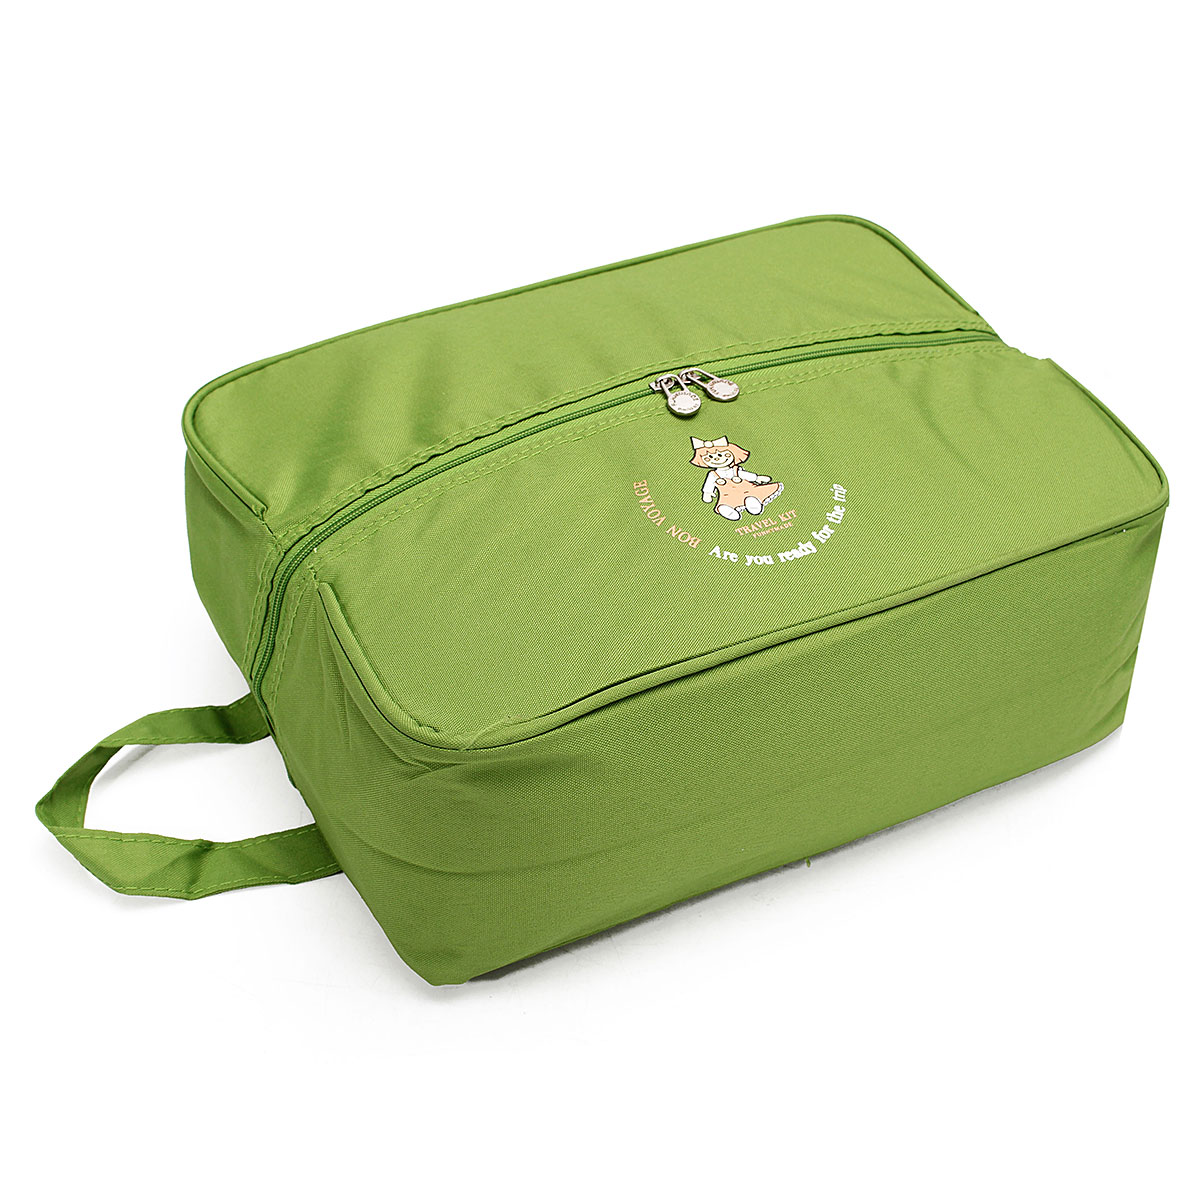 Portable-Nylon-Travel-Storage-Bag-Pouch-Bag-Case-Luggage-Cosmetic-Organizer-1460329-5